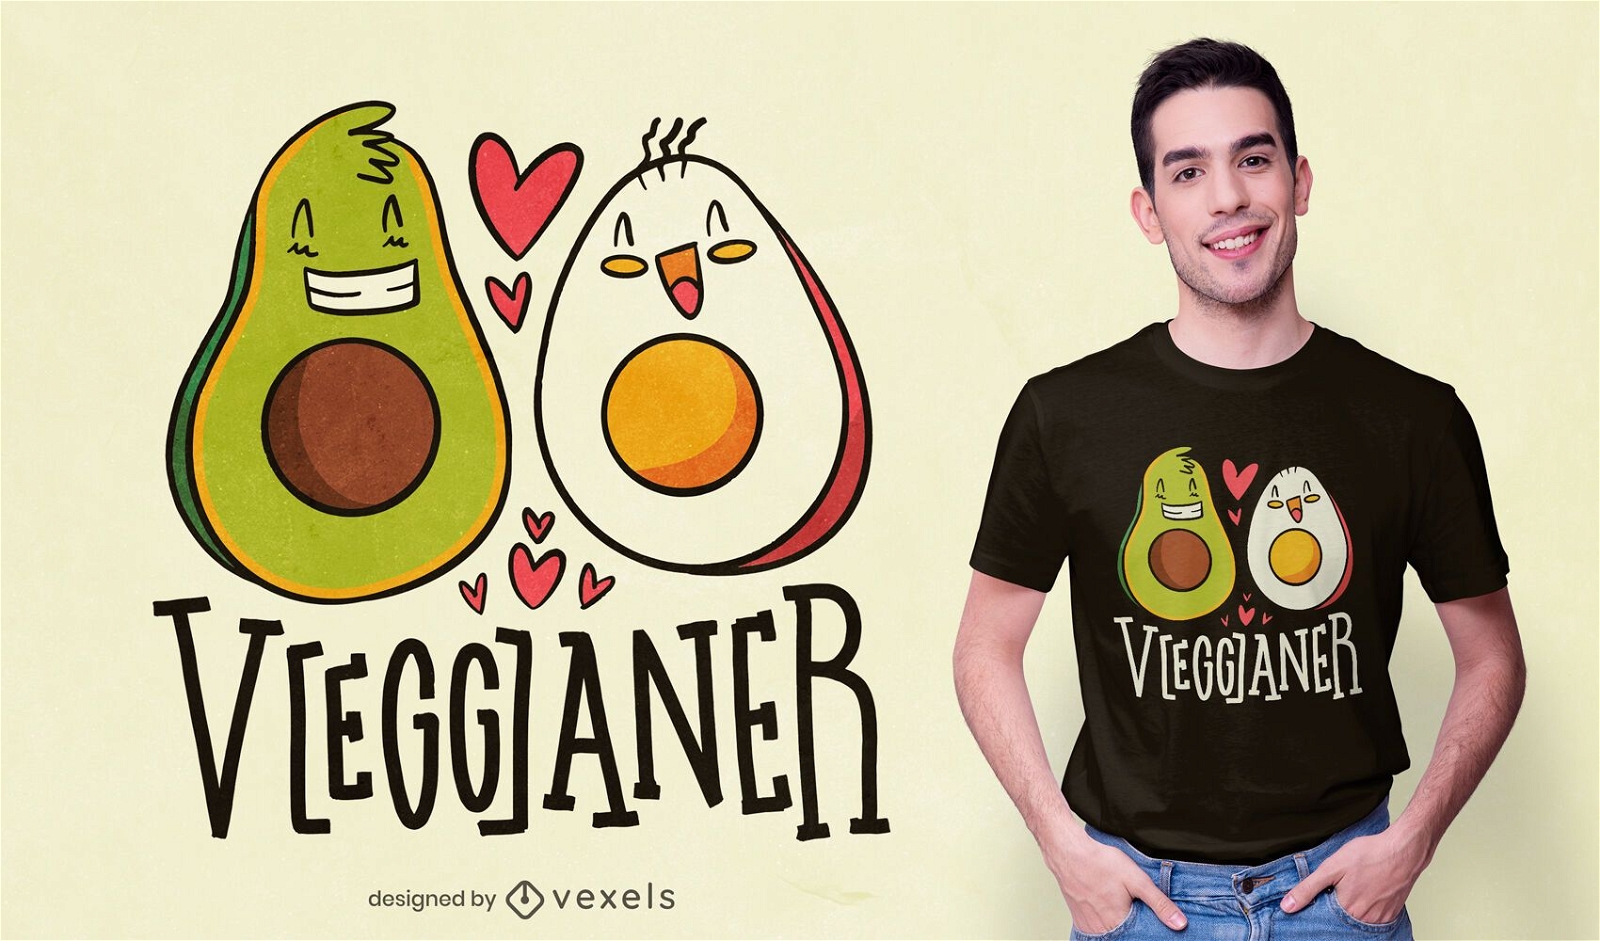 Vegganer t-shirt design